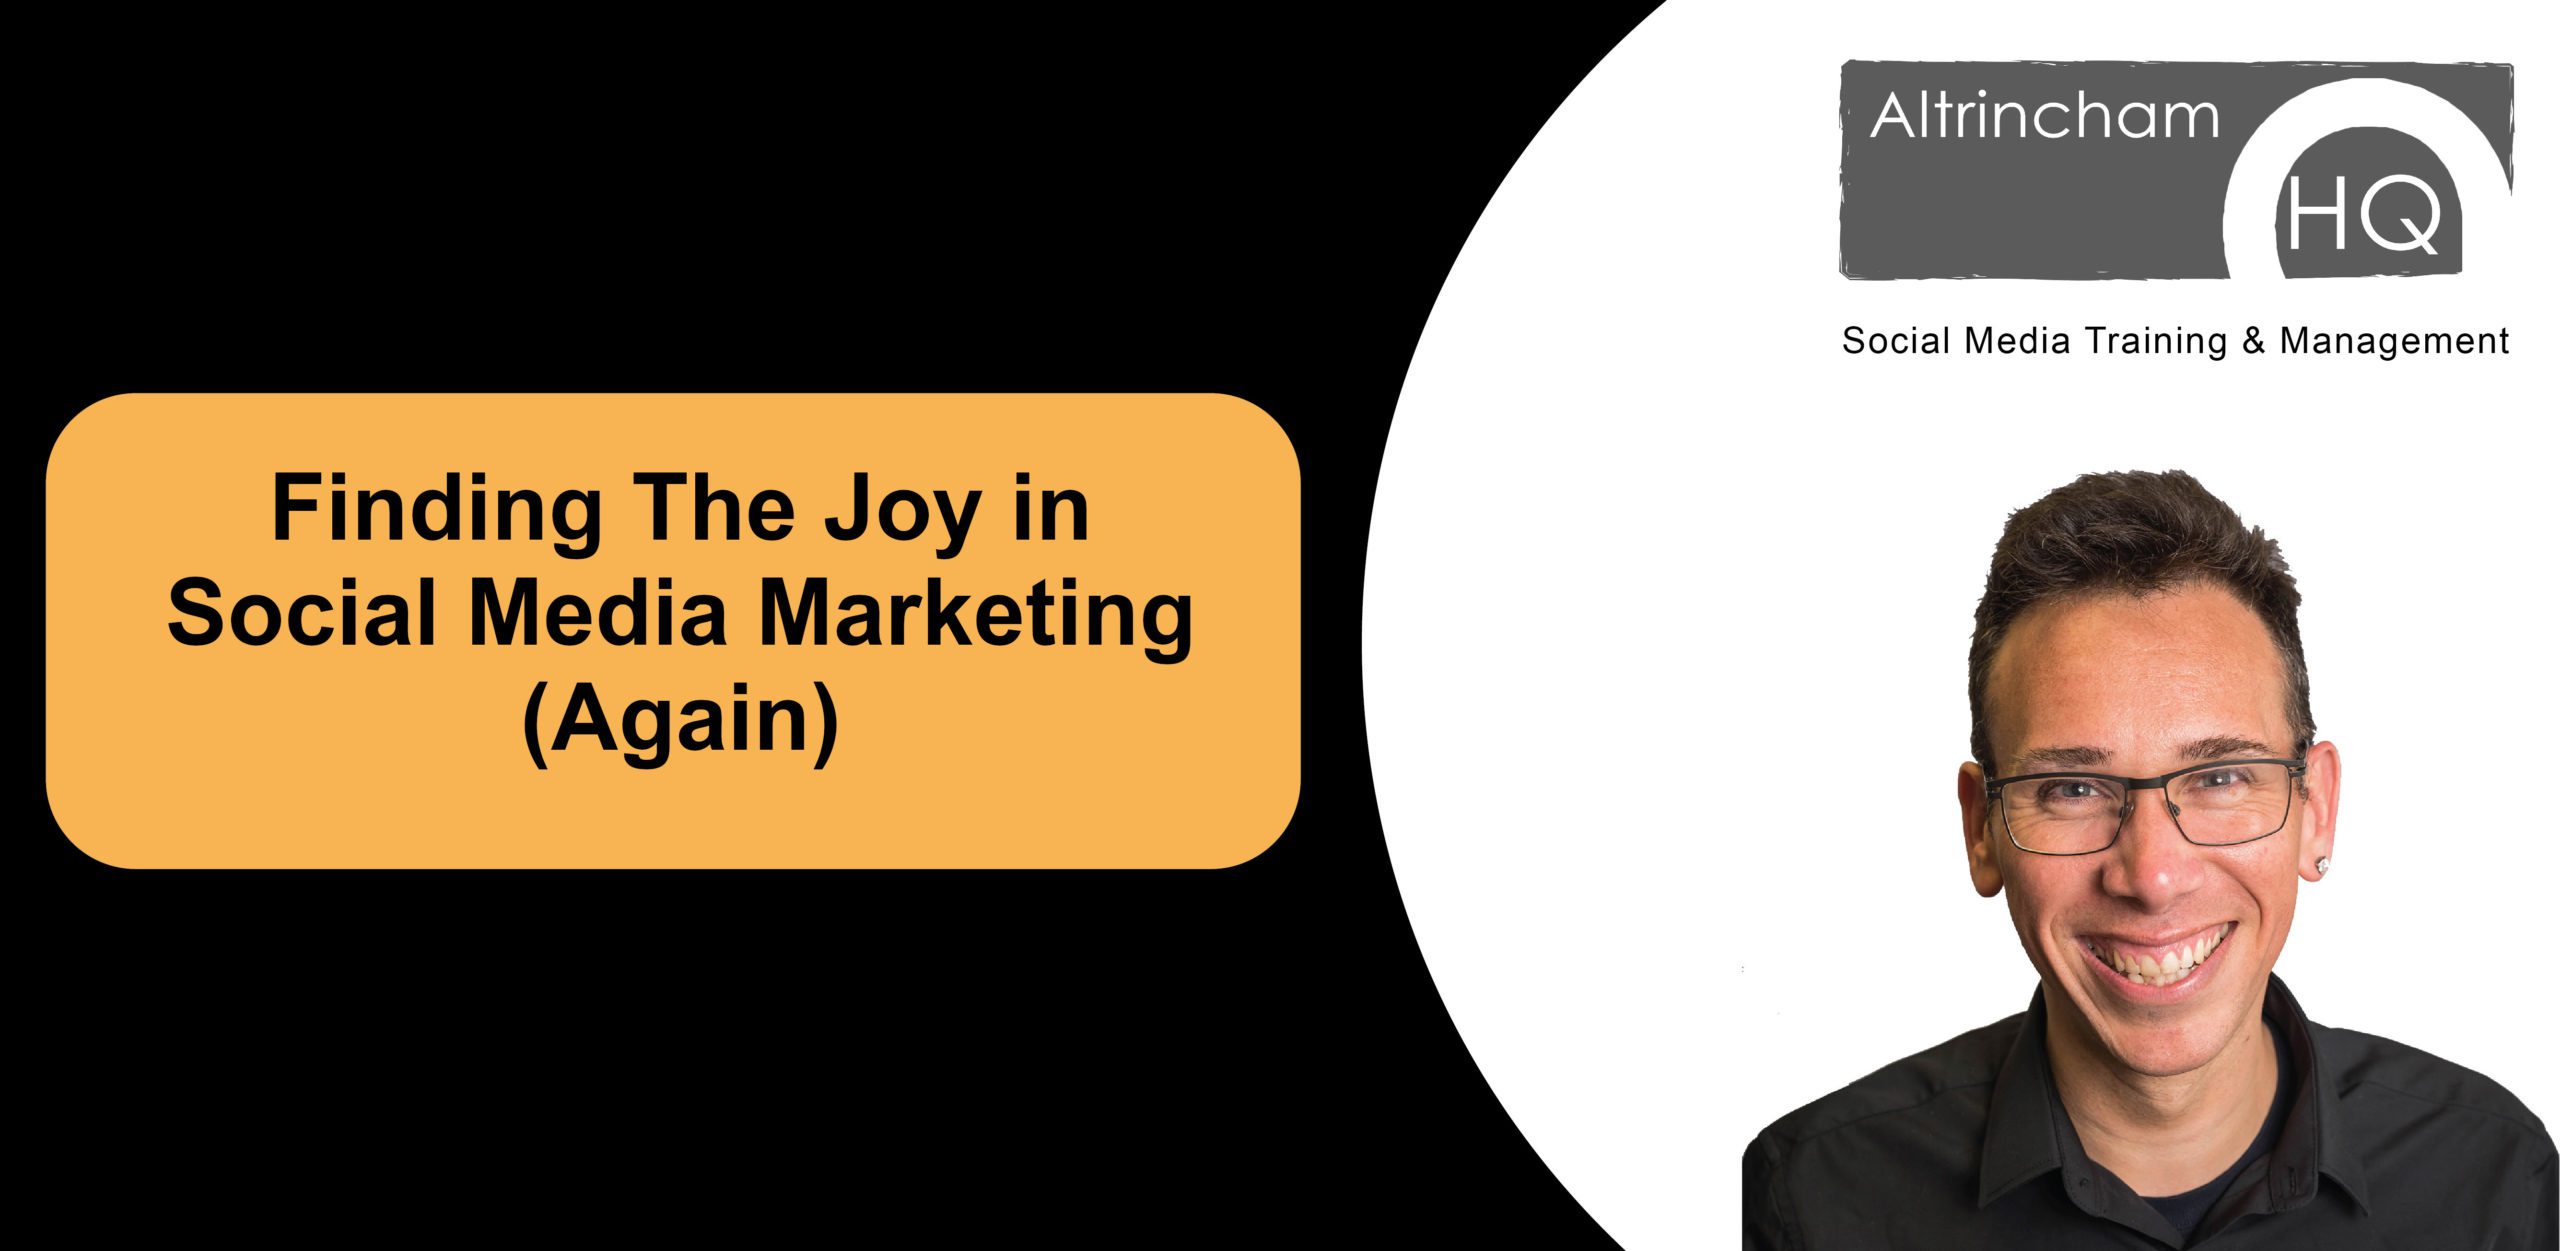 Finding The Joy in Social Media Marketing (Again)